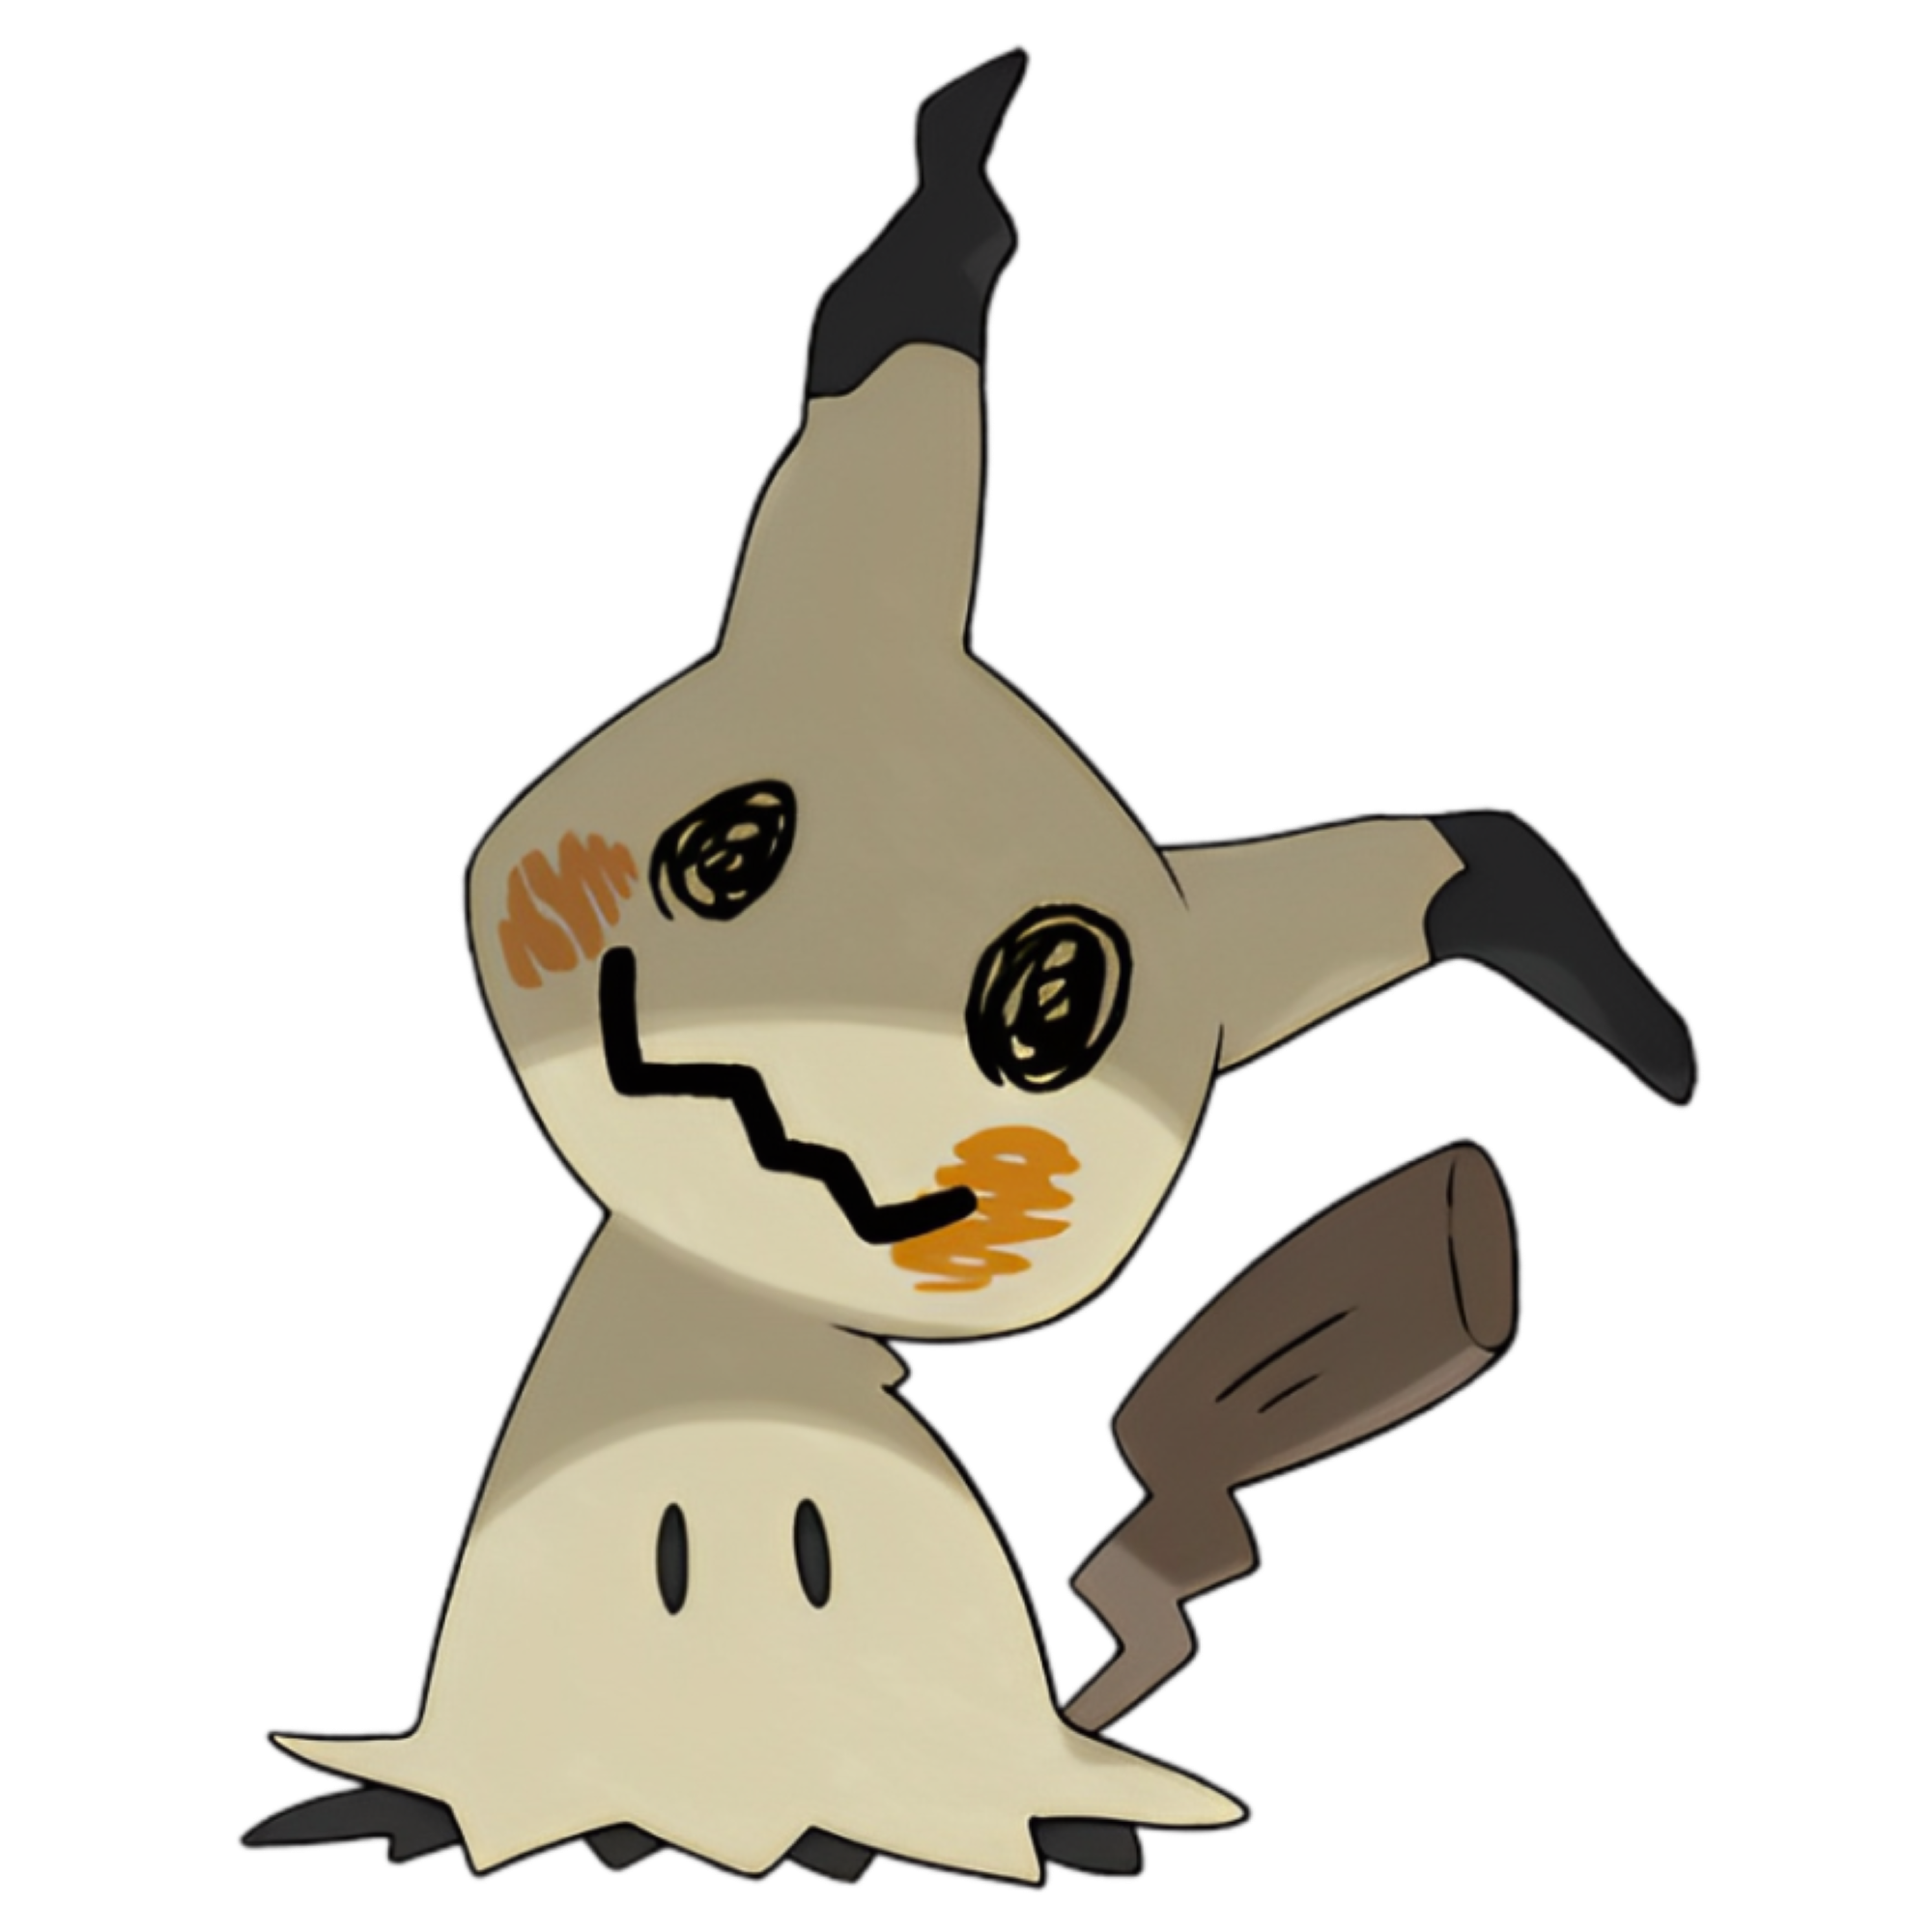 I made 3 alt shiny Lunala, my favorite ghost pokemon. What do you